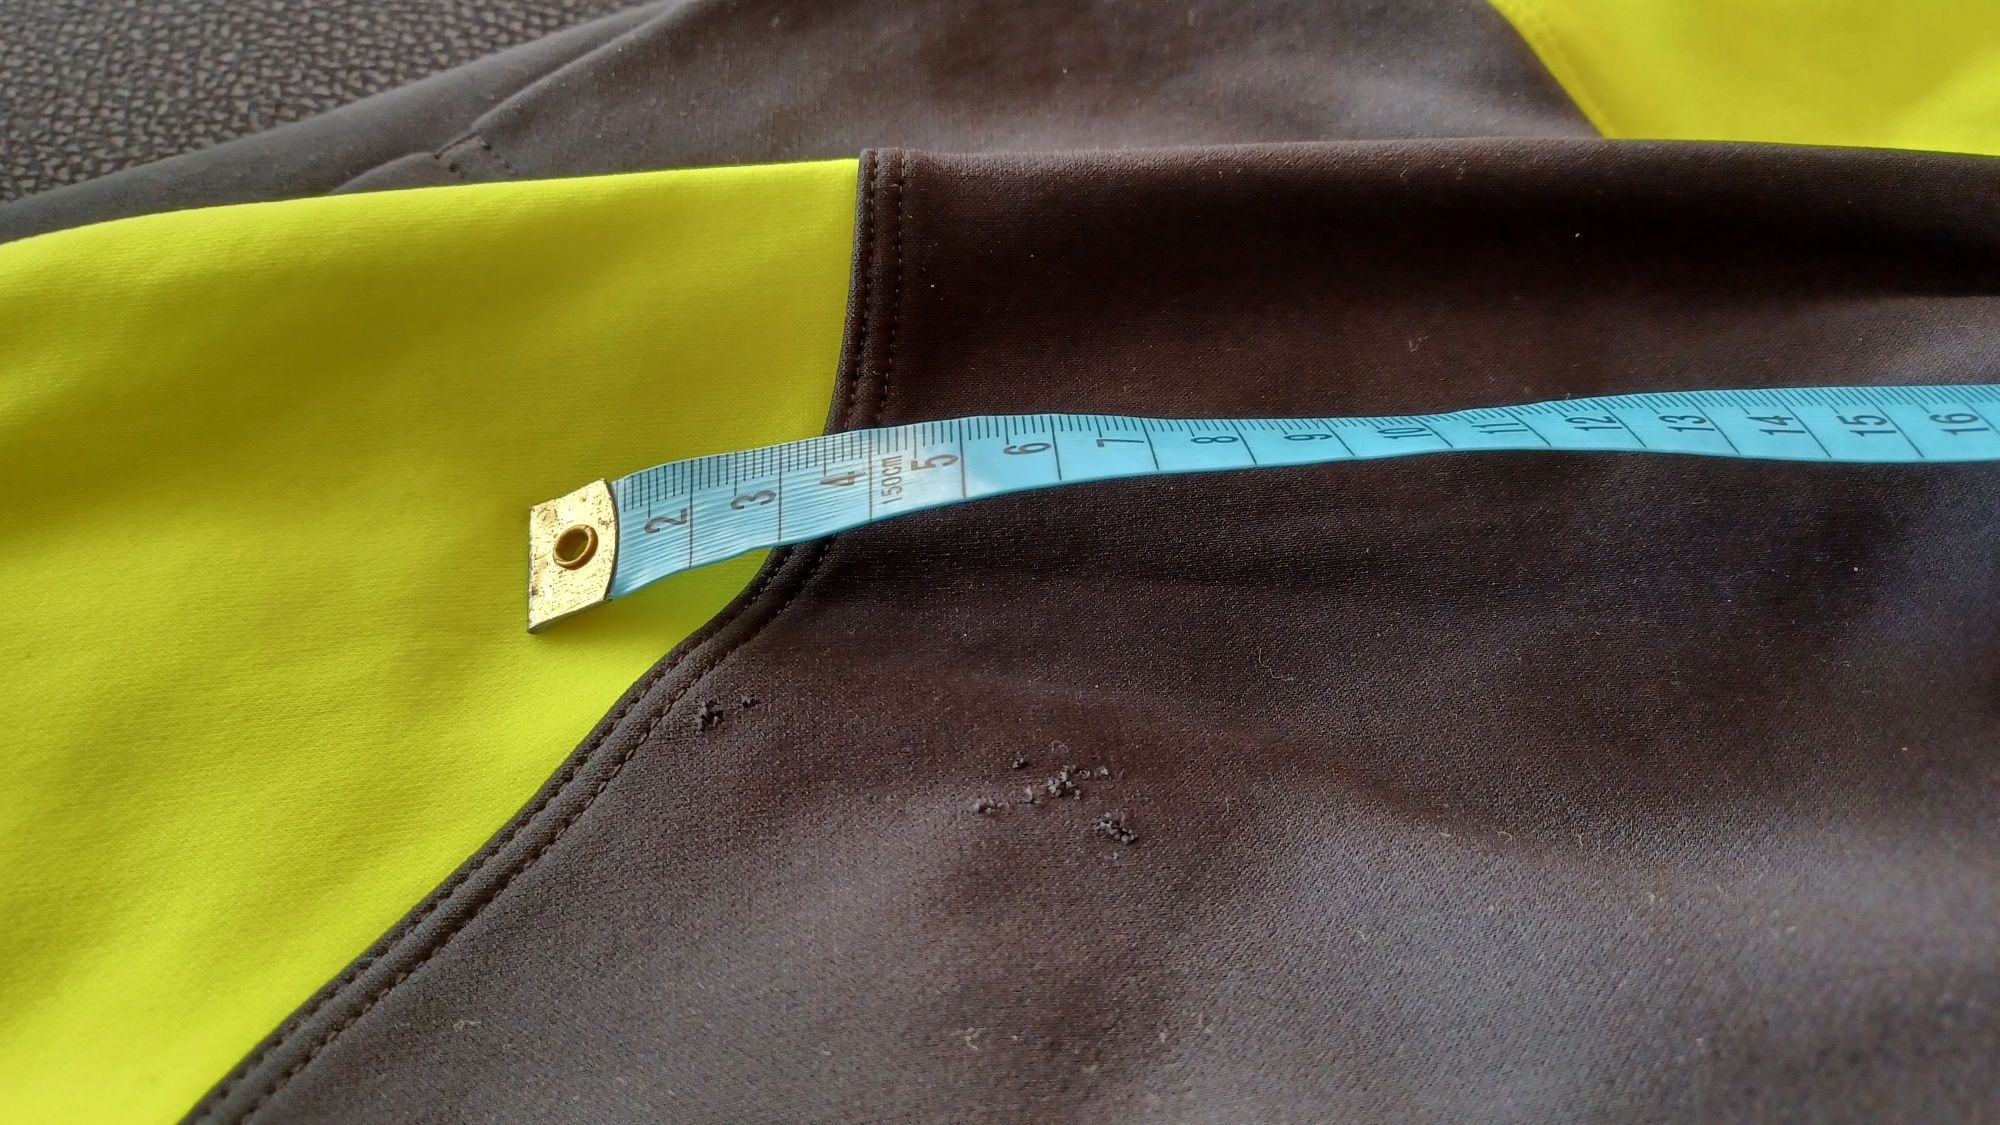 Bluza rowerowa Pearl Izumi rozmiar L